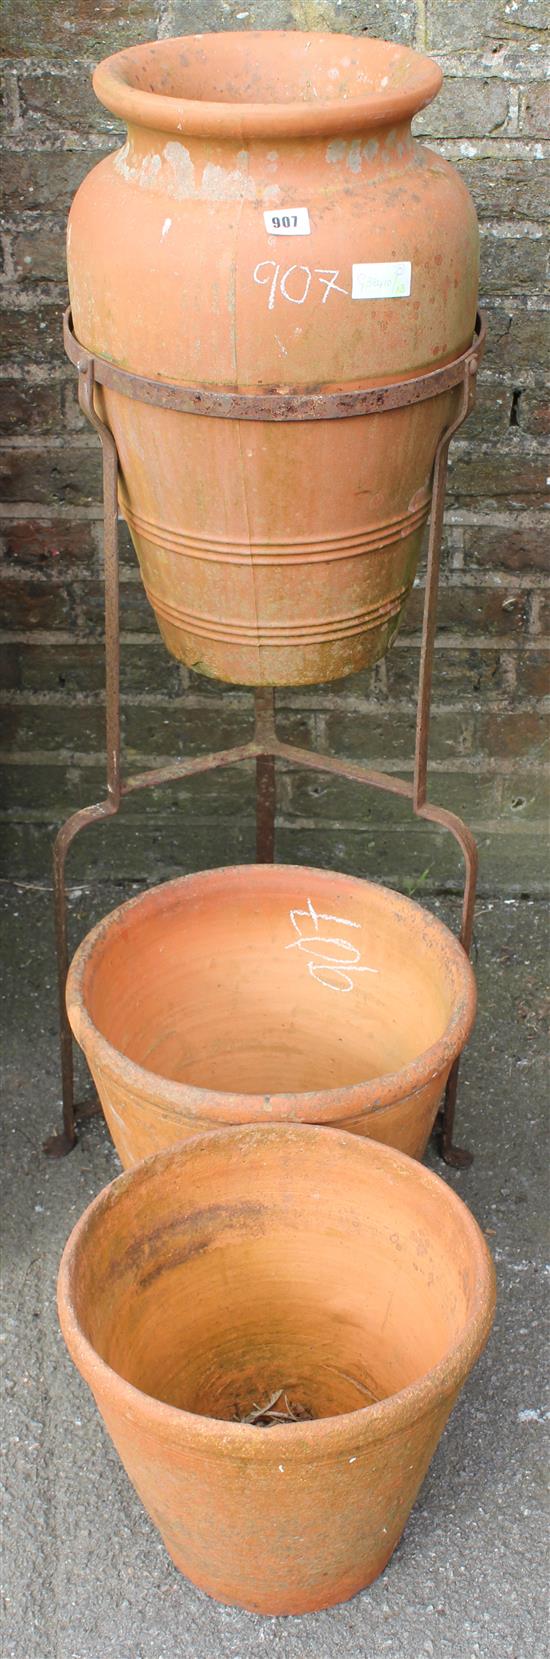 Pair of Victorian garden pots & terracotta urn on metal stand